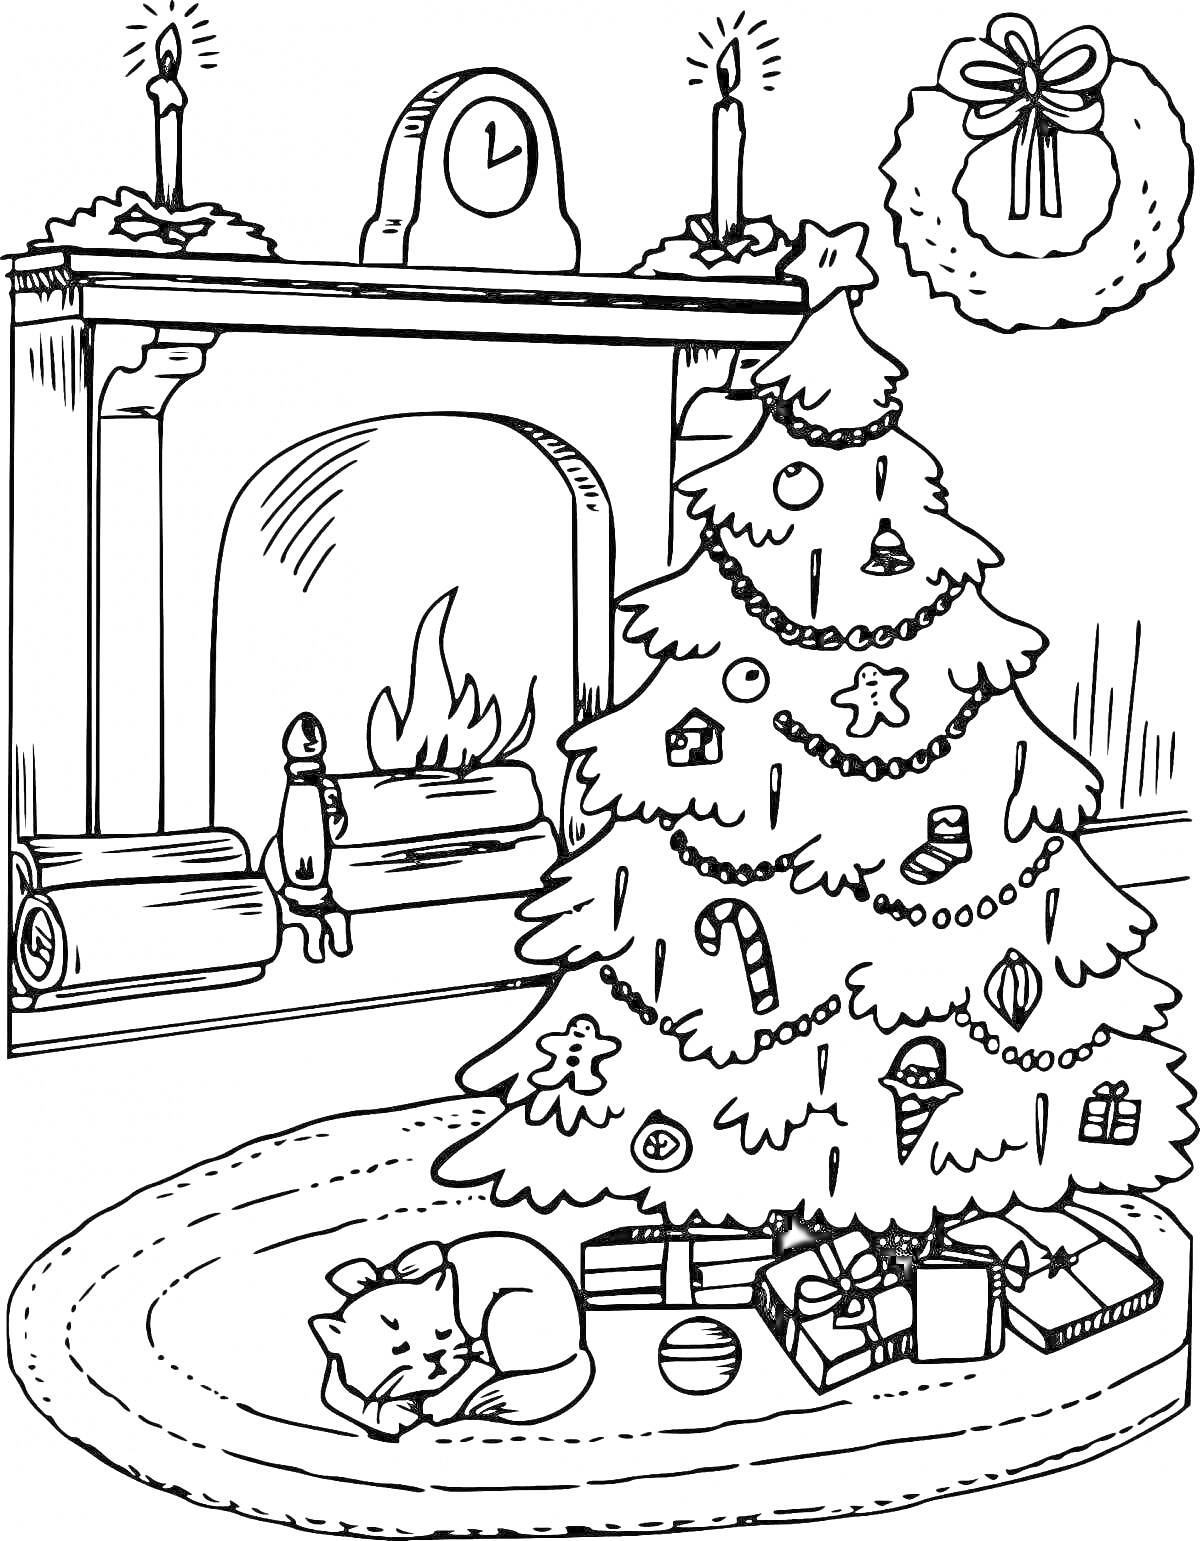 На раскраске изображено: Елка, Камин, Подарки, Кот, Игрушки, Свечи, Часы